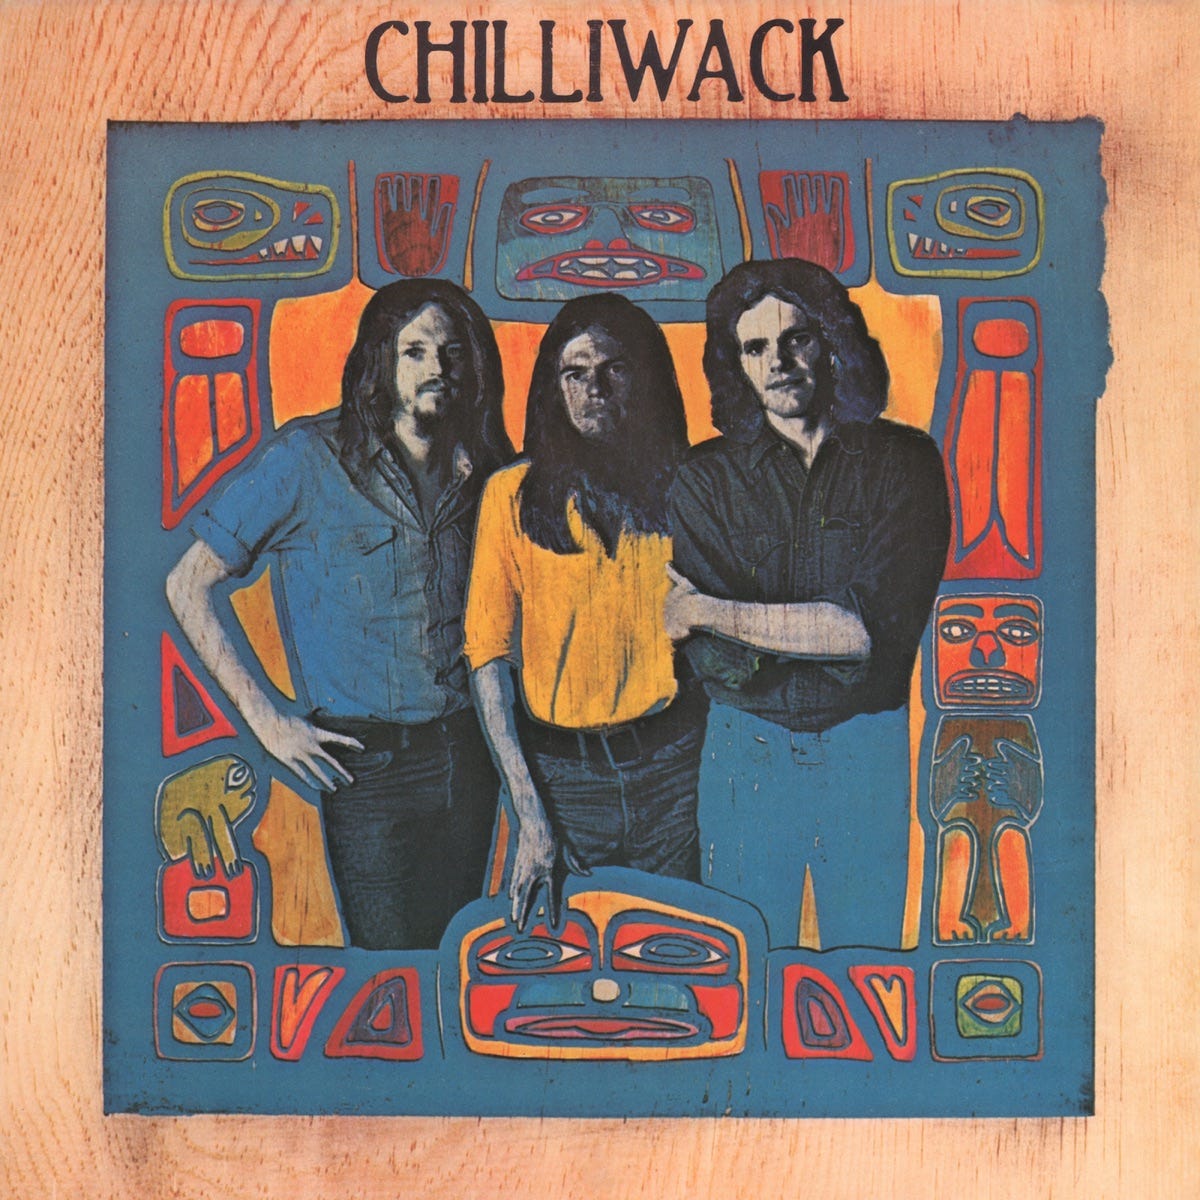 Chilliwack II by Chilliwack on Apple Music